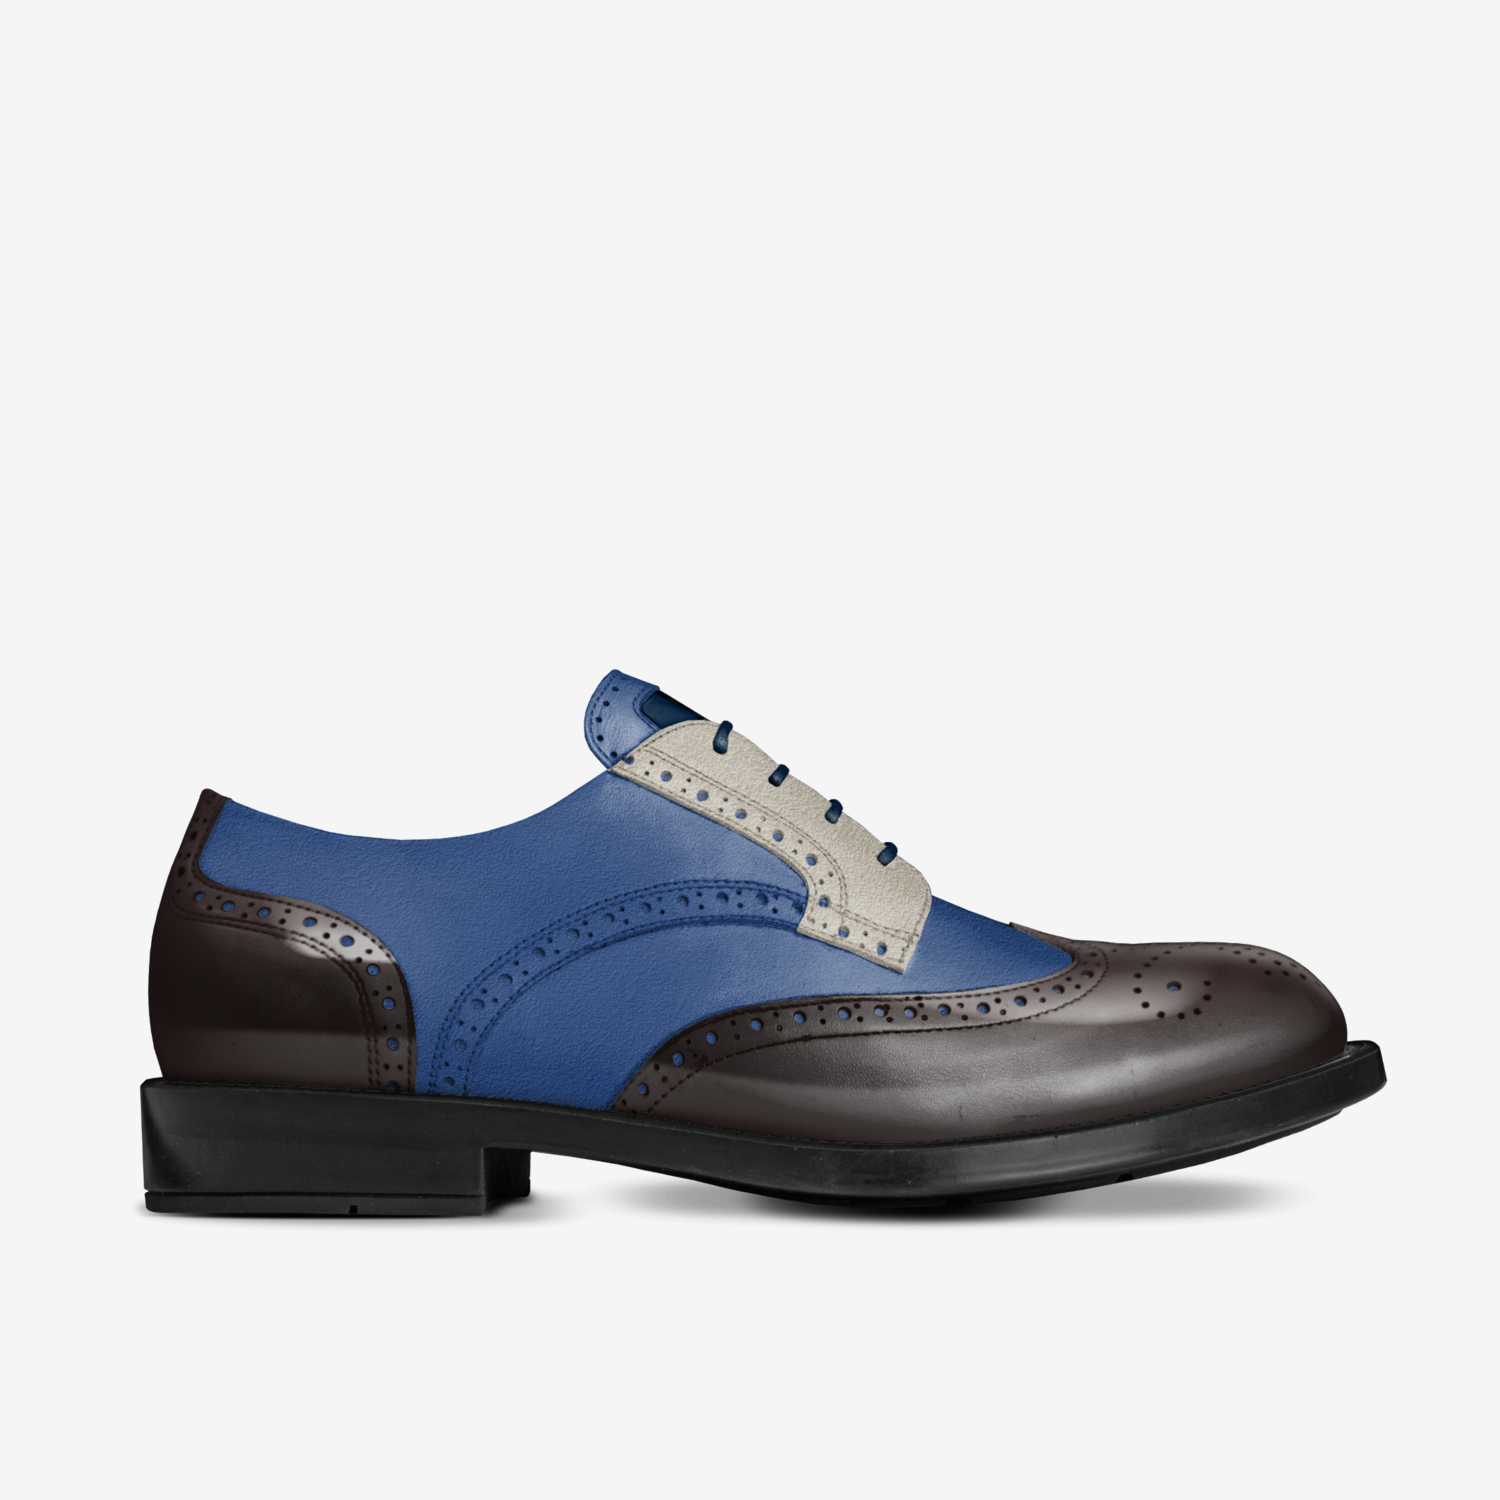 Fil | A Custom Shoe concept by Davide Filippi